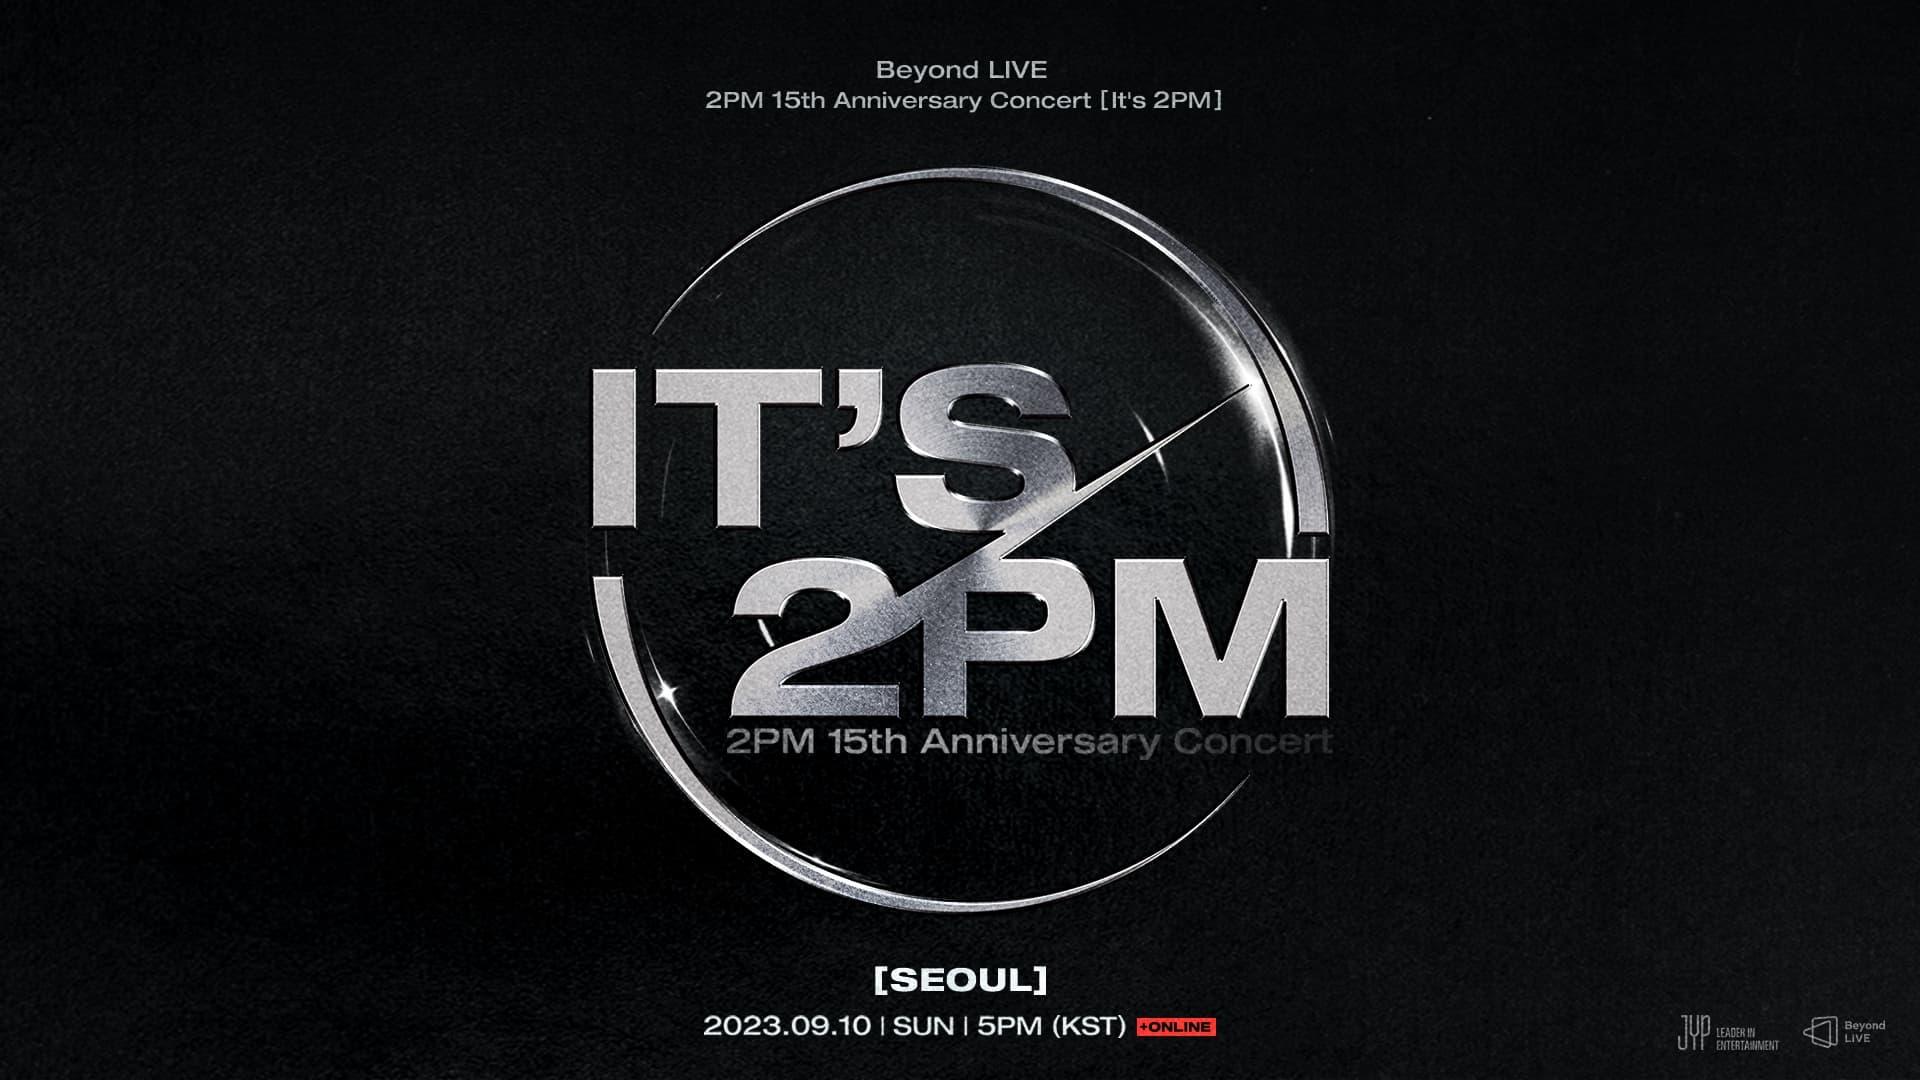 2PM 15th Anniversary Concert "It's 2PM" backdrop